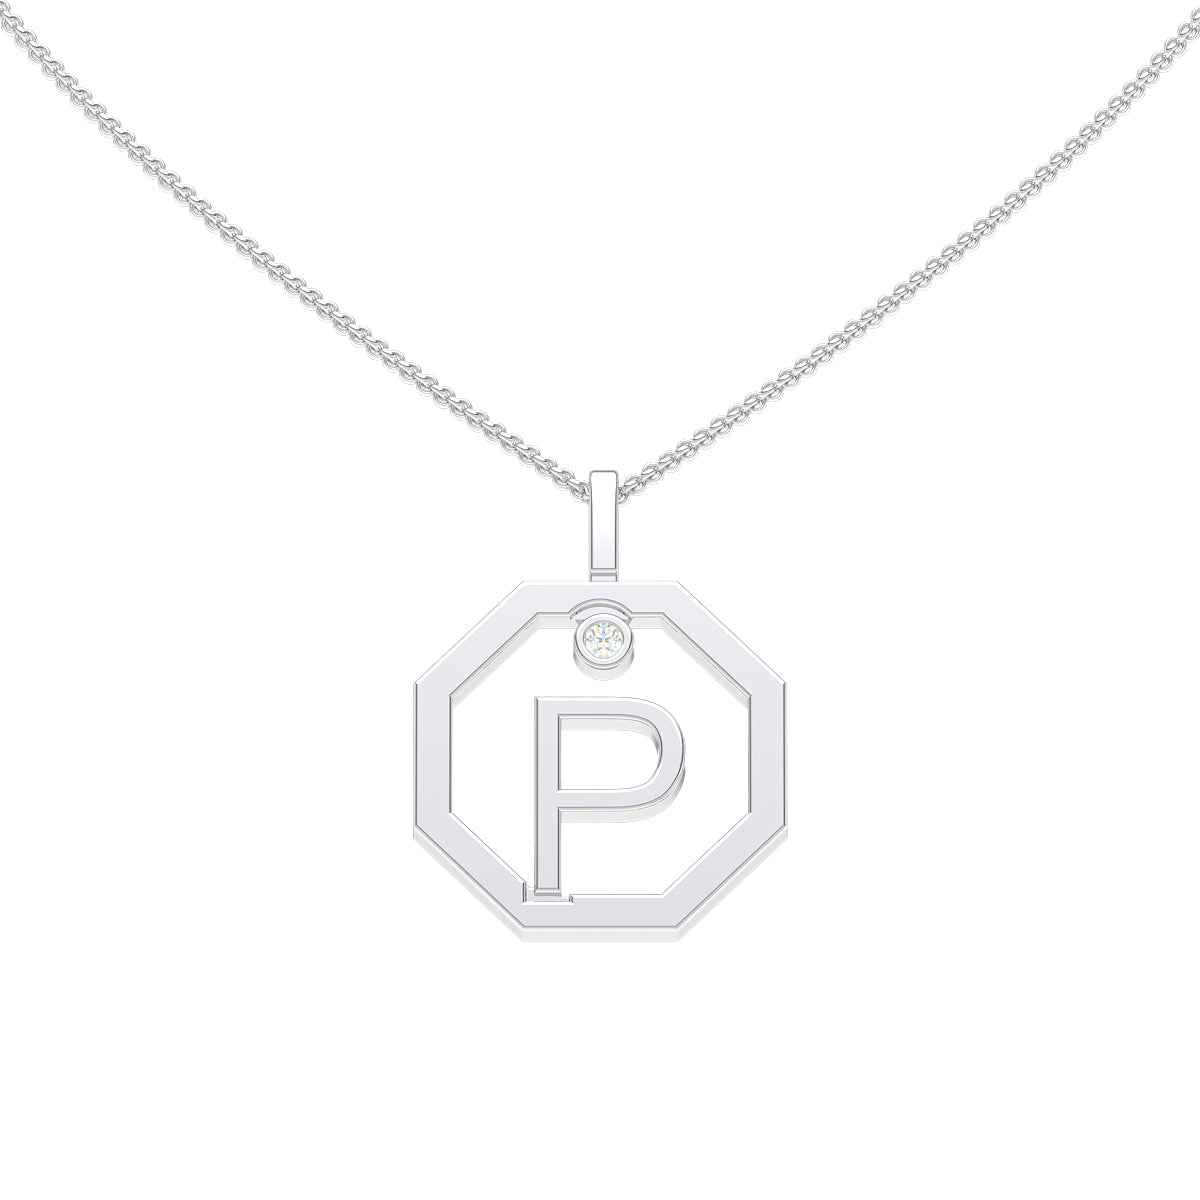 Personalised-Initial-P-diamond-white-gold-pendant-by-Sydney-jewellers-Lizunova